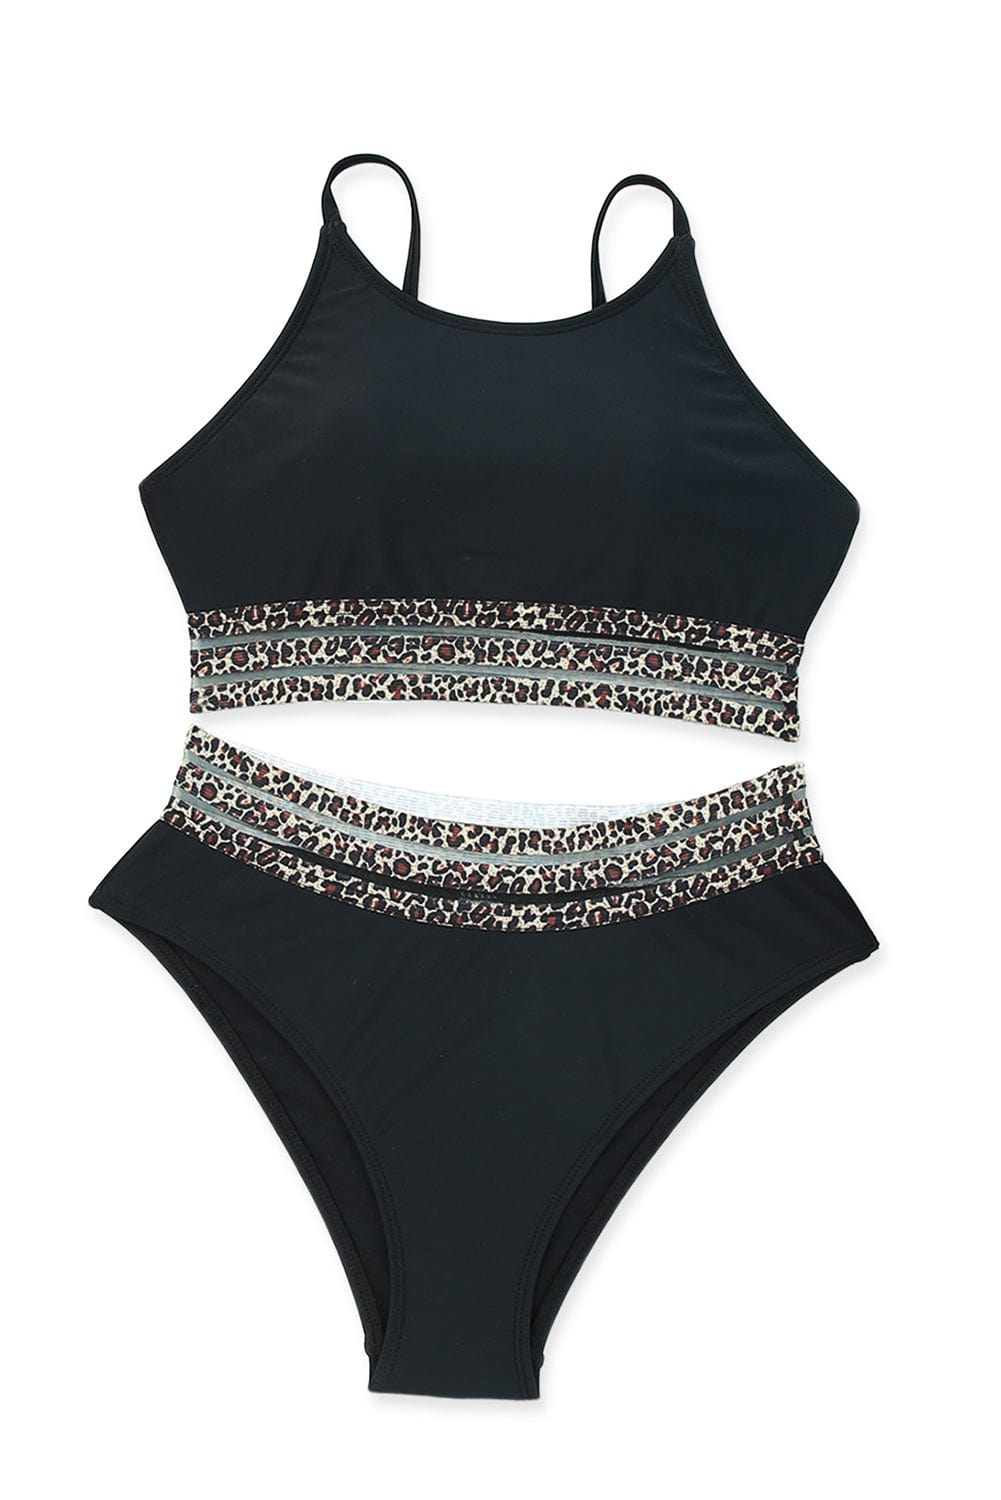 The802Gypsy  Swimwear TRAVELING GYPSY- Leopard Mesh Trim 2pcs Bikini Swimsuit